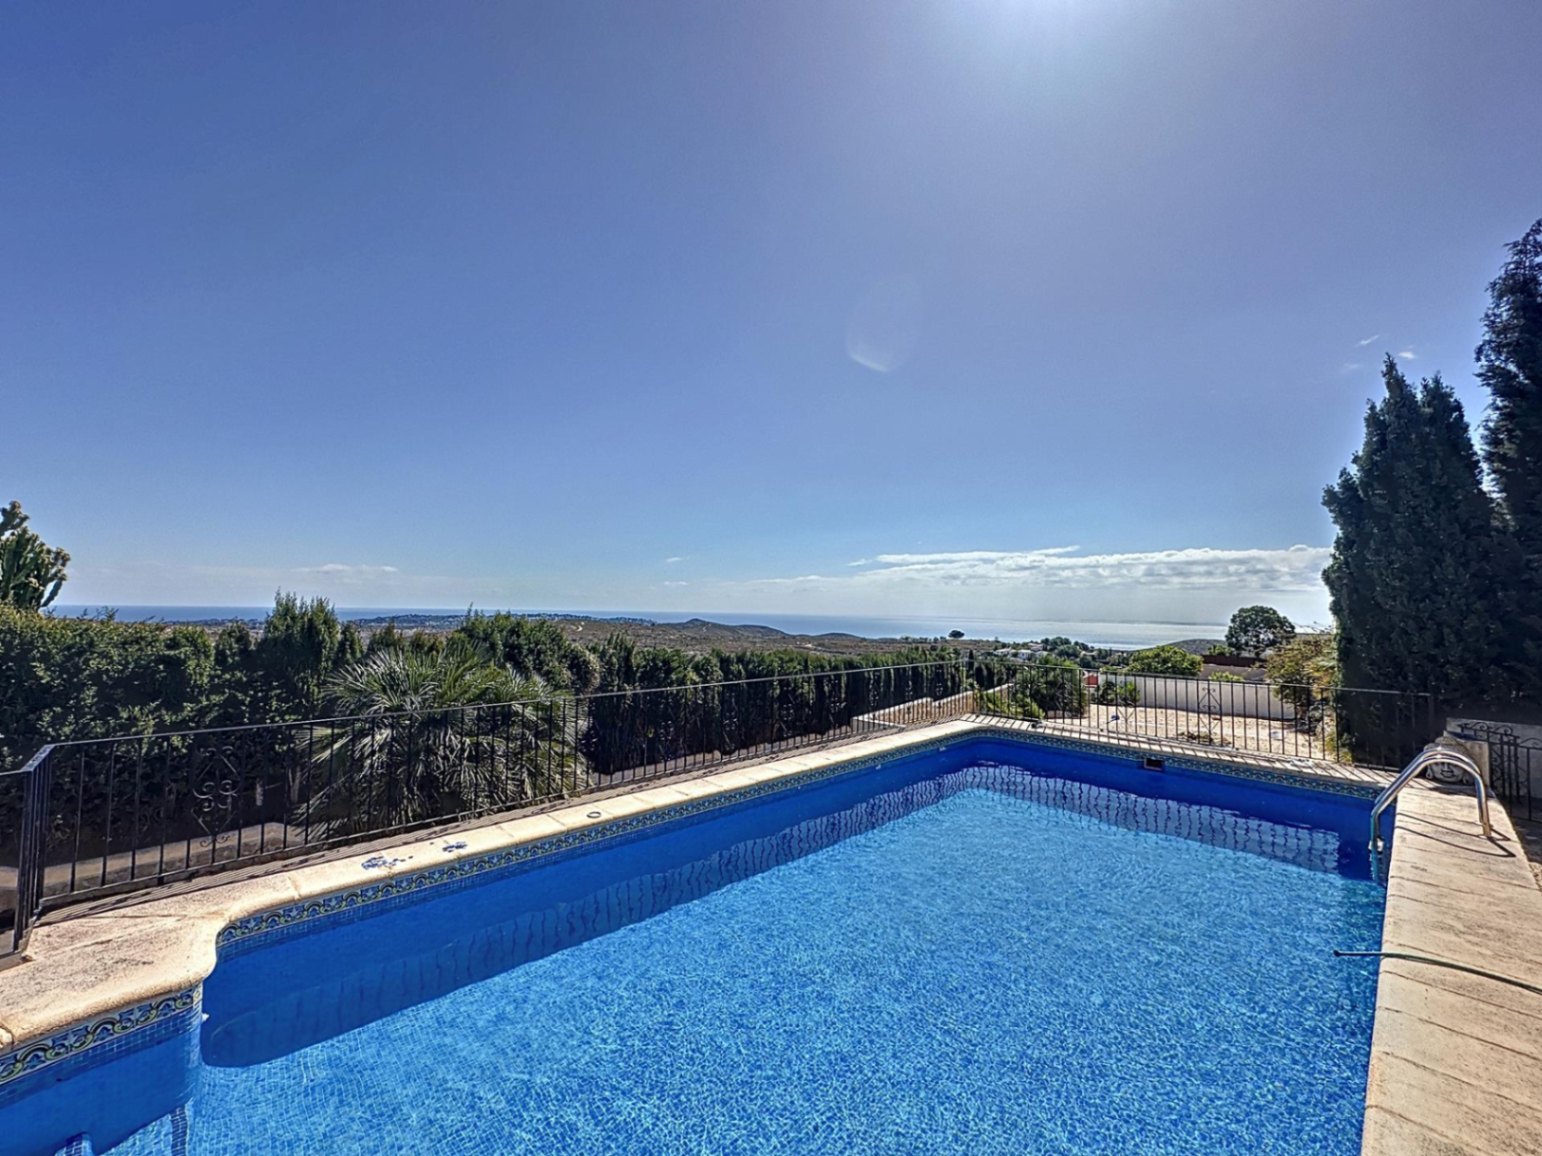 Cumbre del Sol Villa zum Renovieren mit Meerblick und Pool